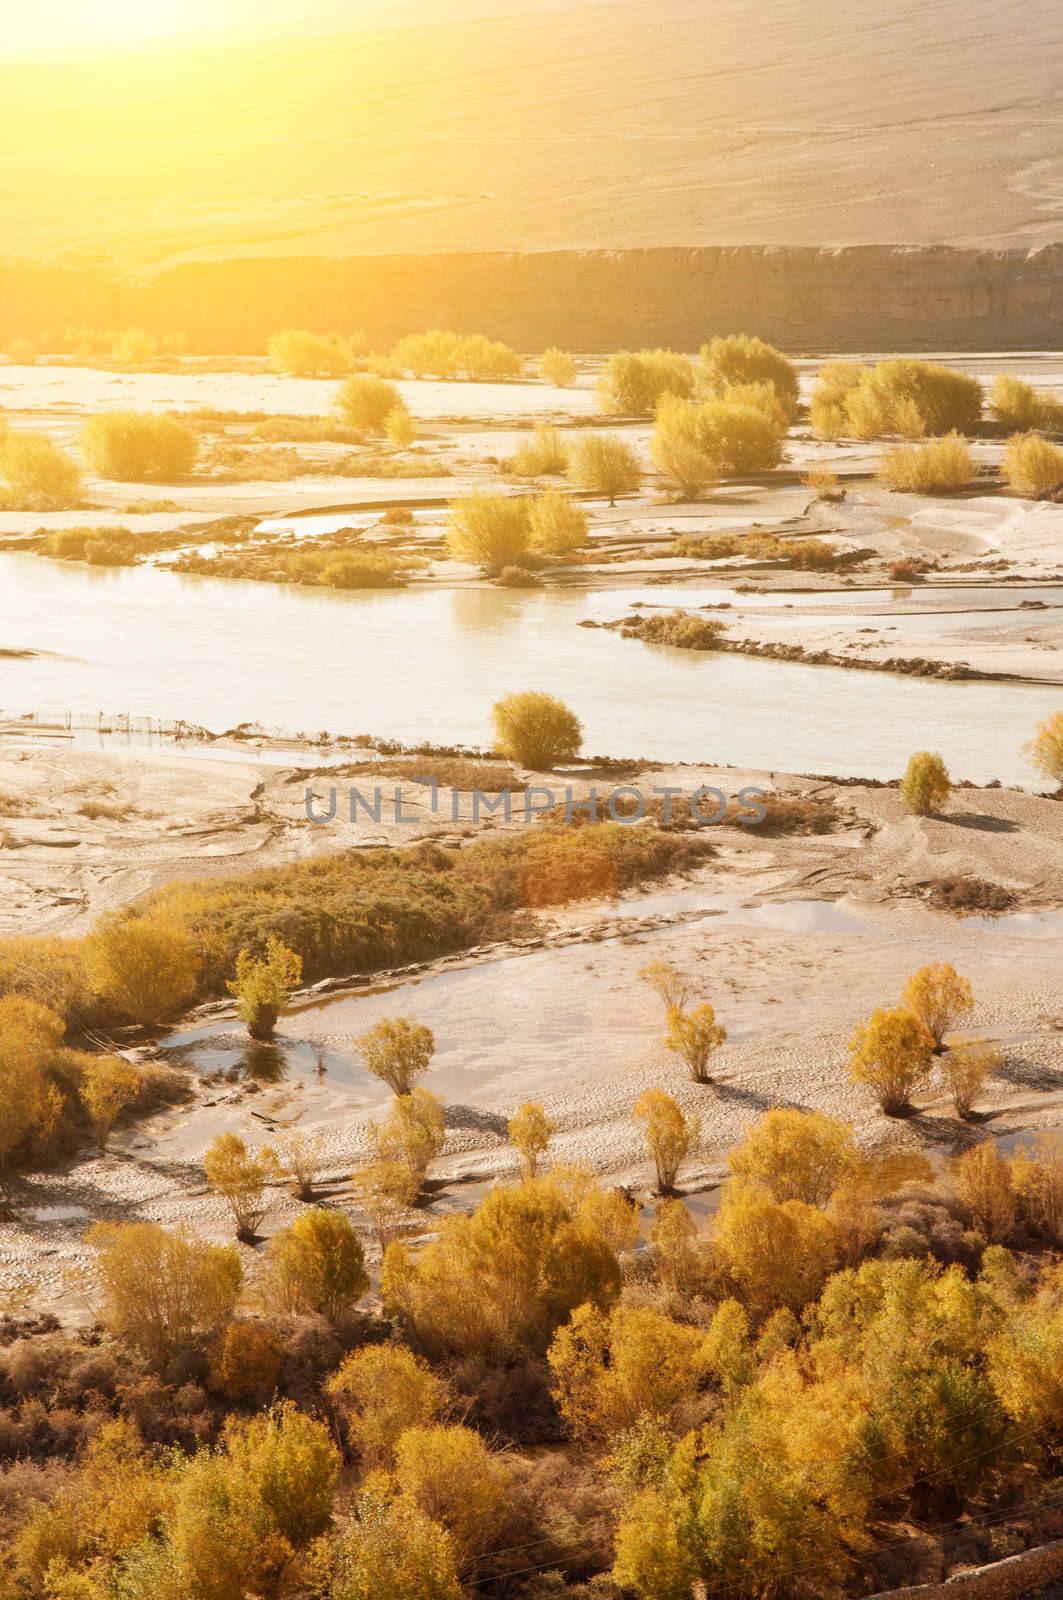 Indus River by szefei